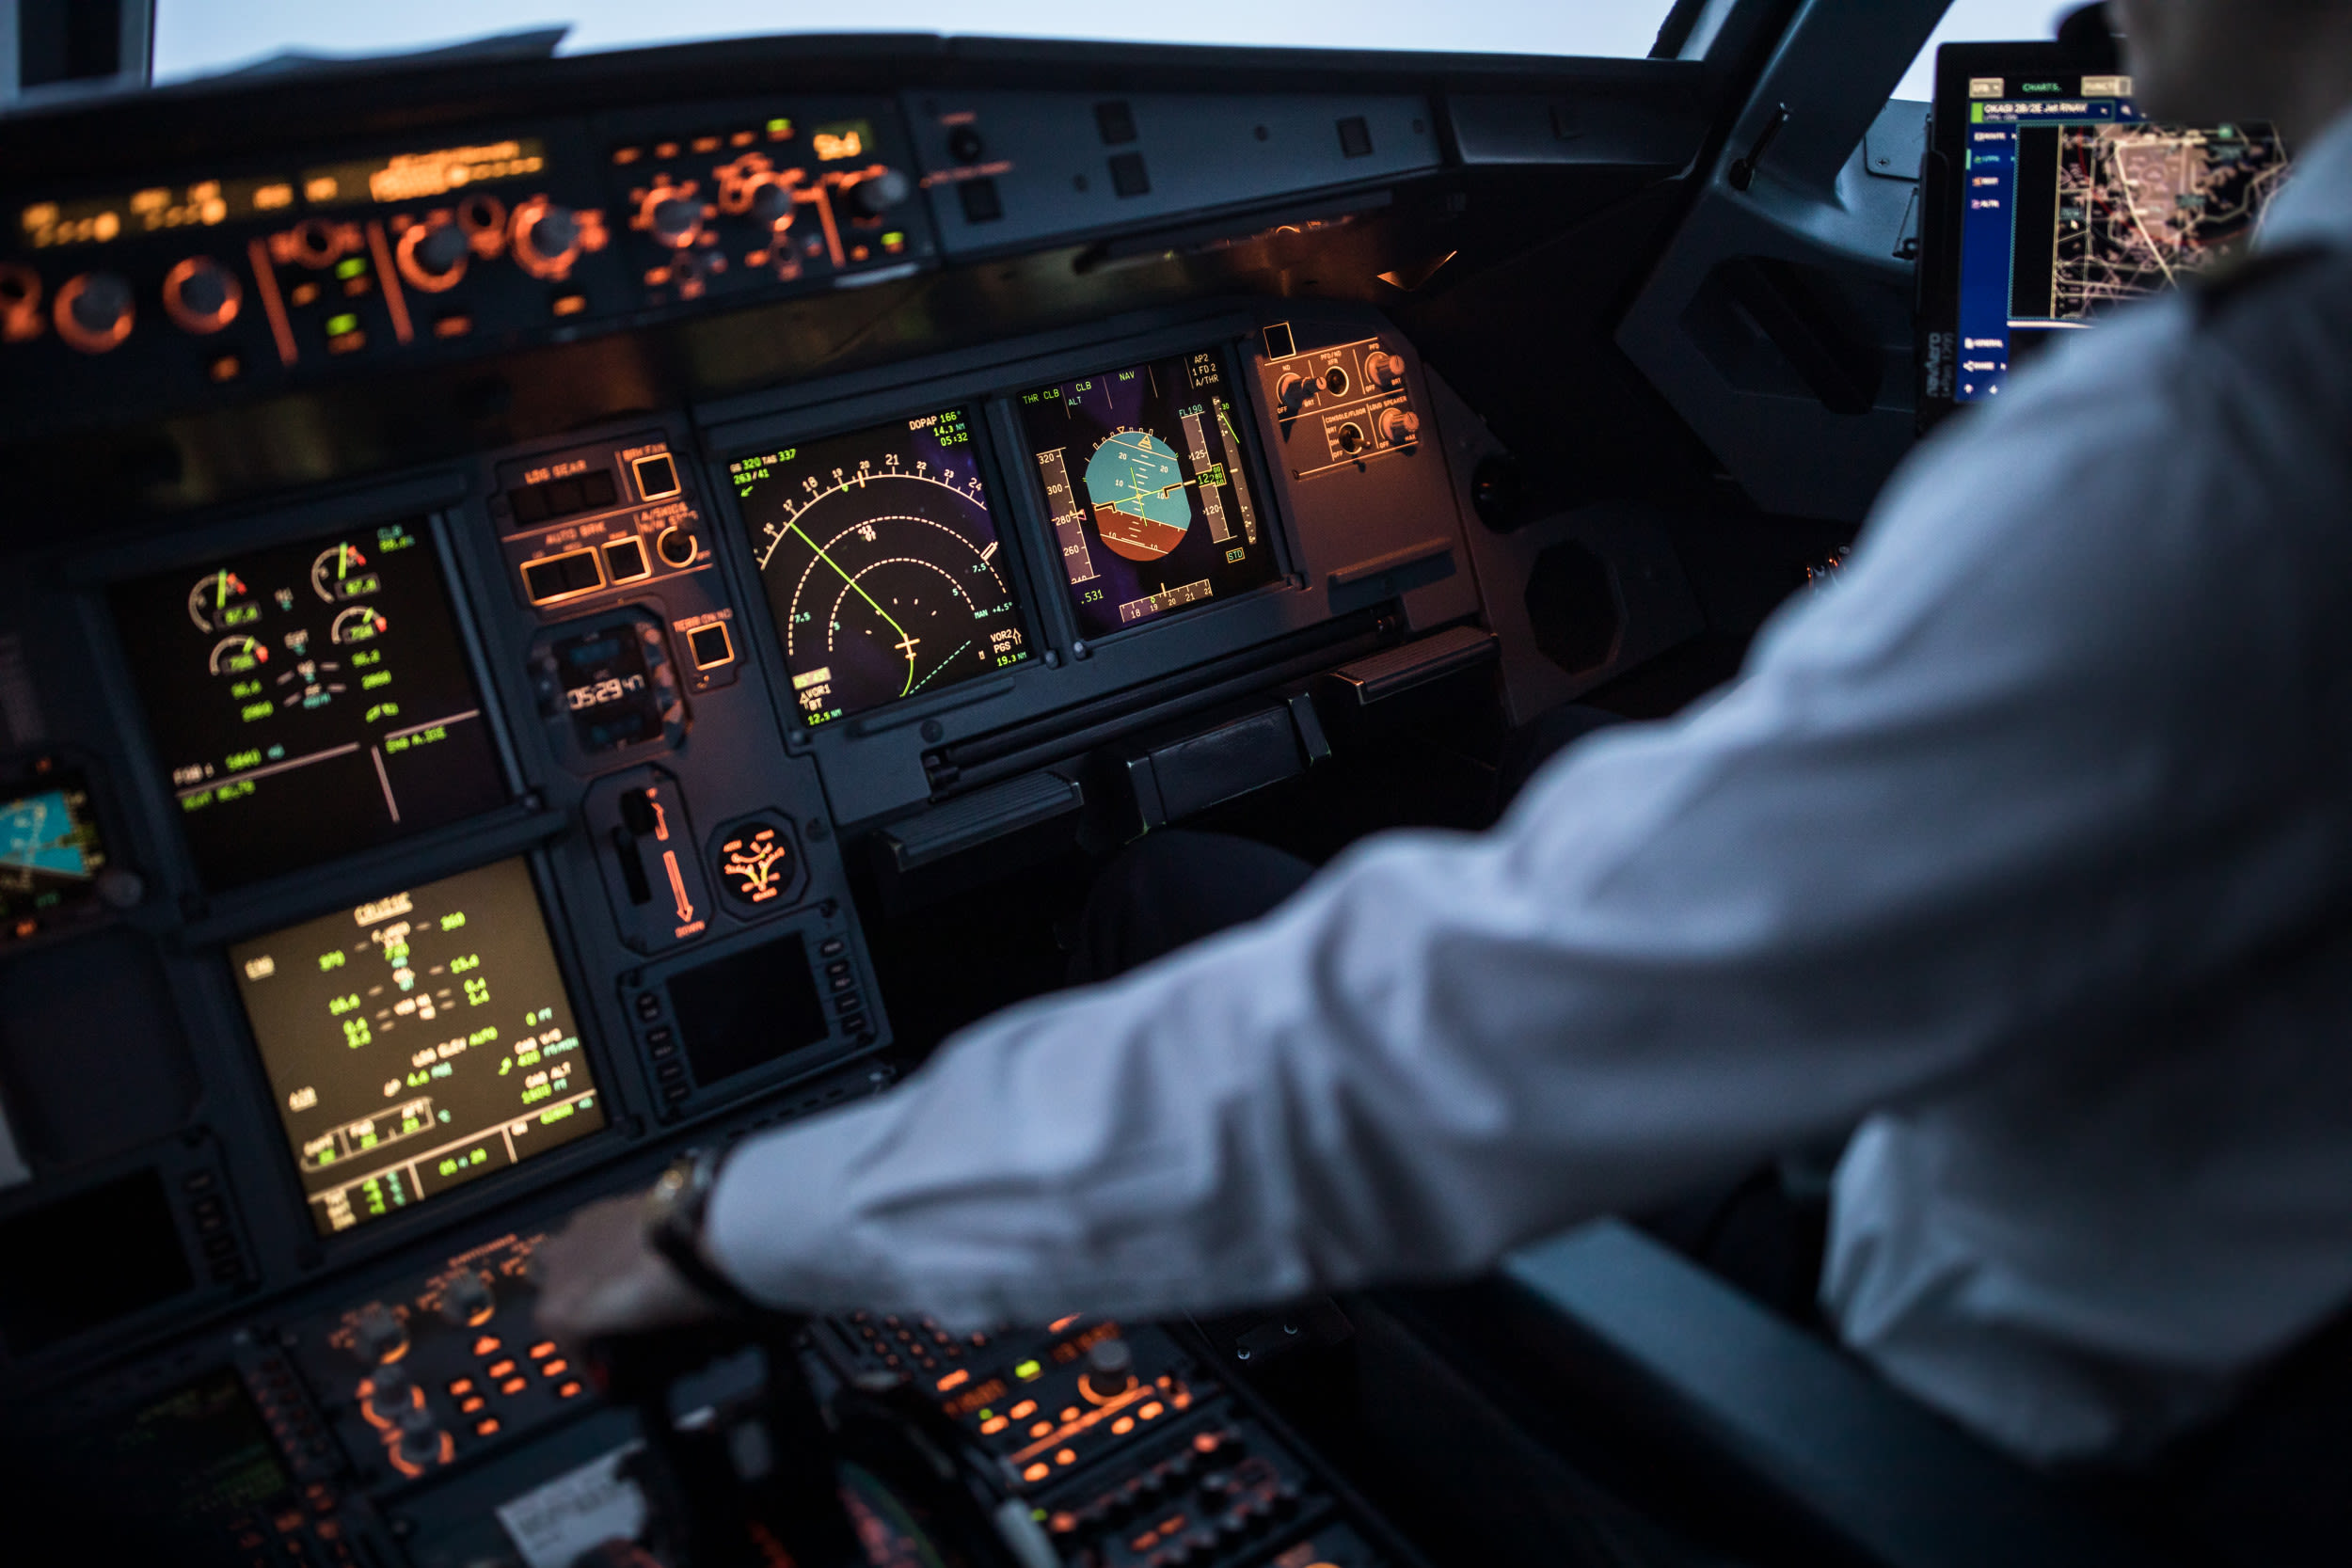 Could a passenger fly a plane if a pilot is incapacitated? Captain explains